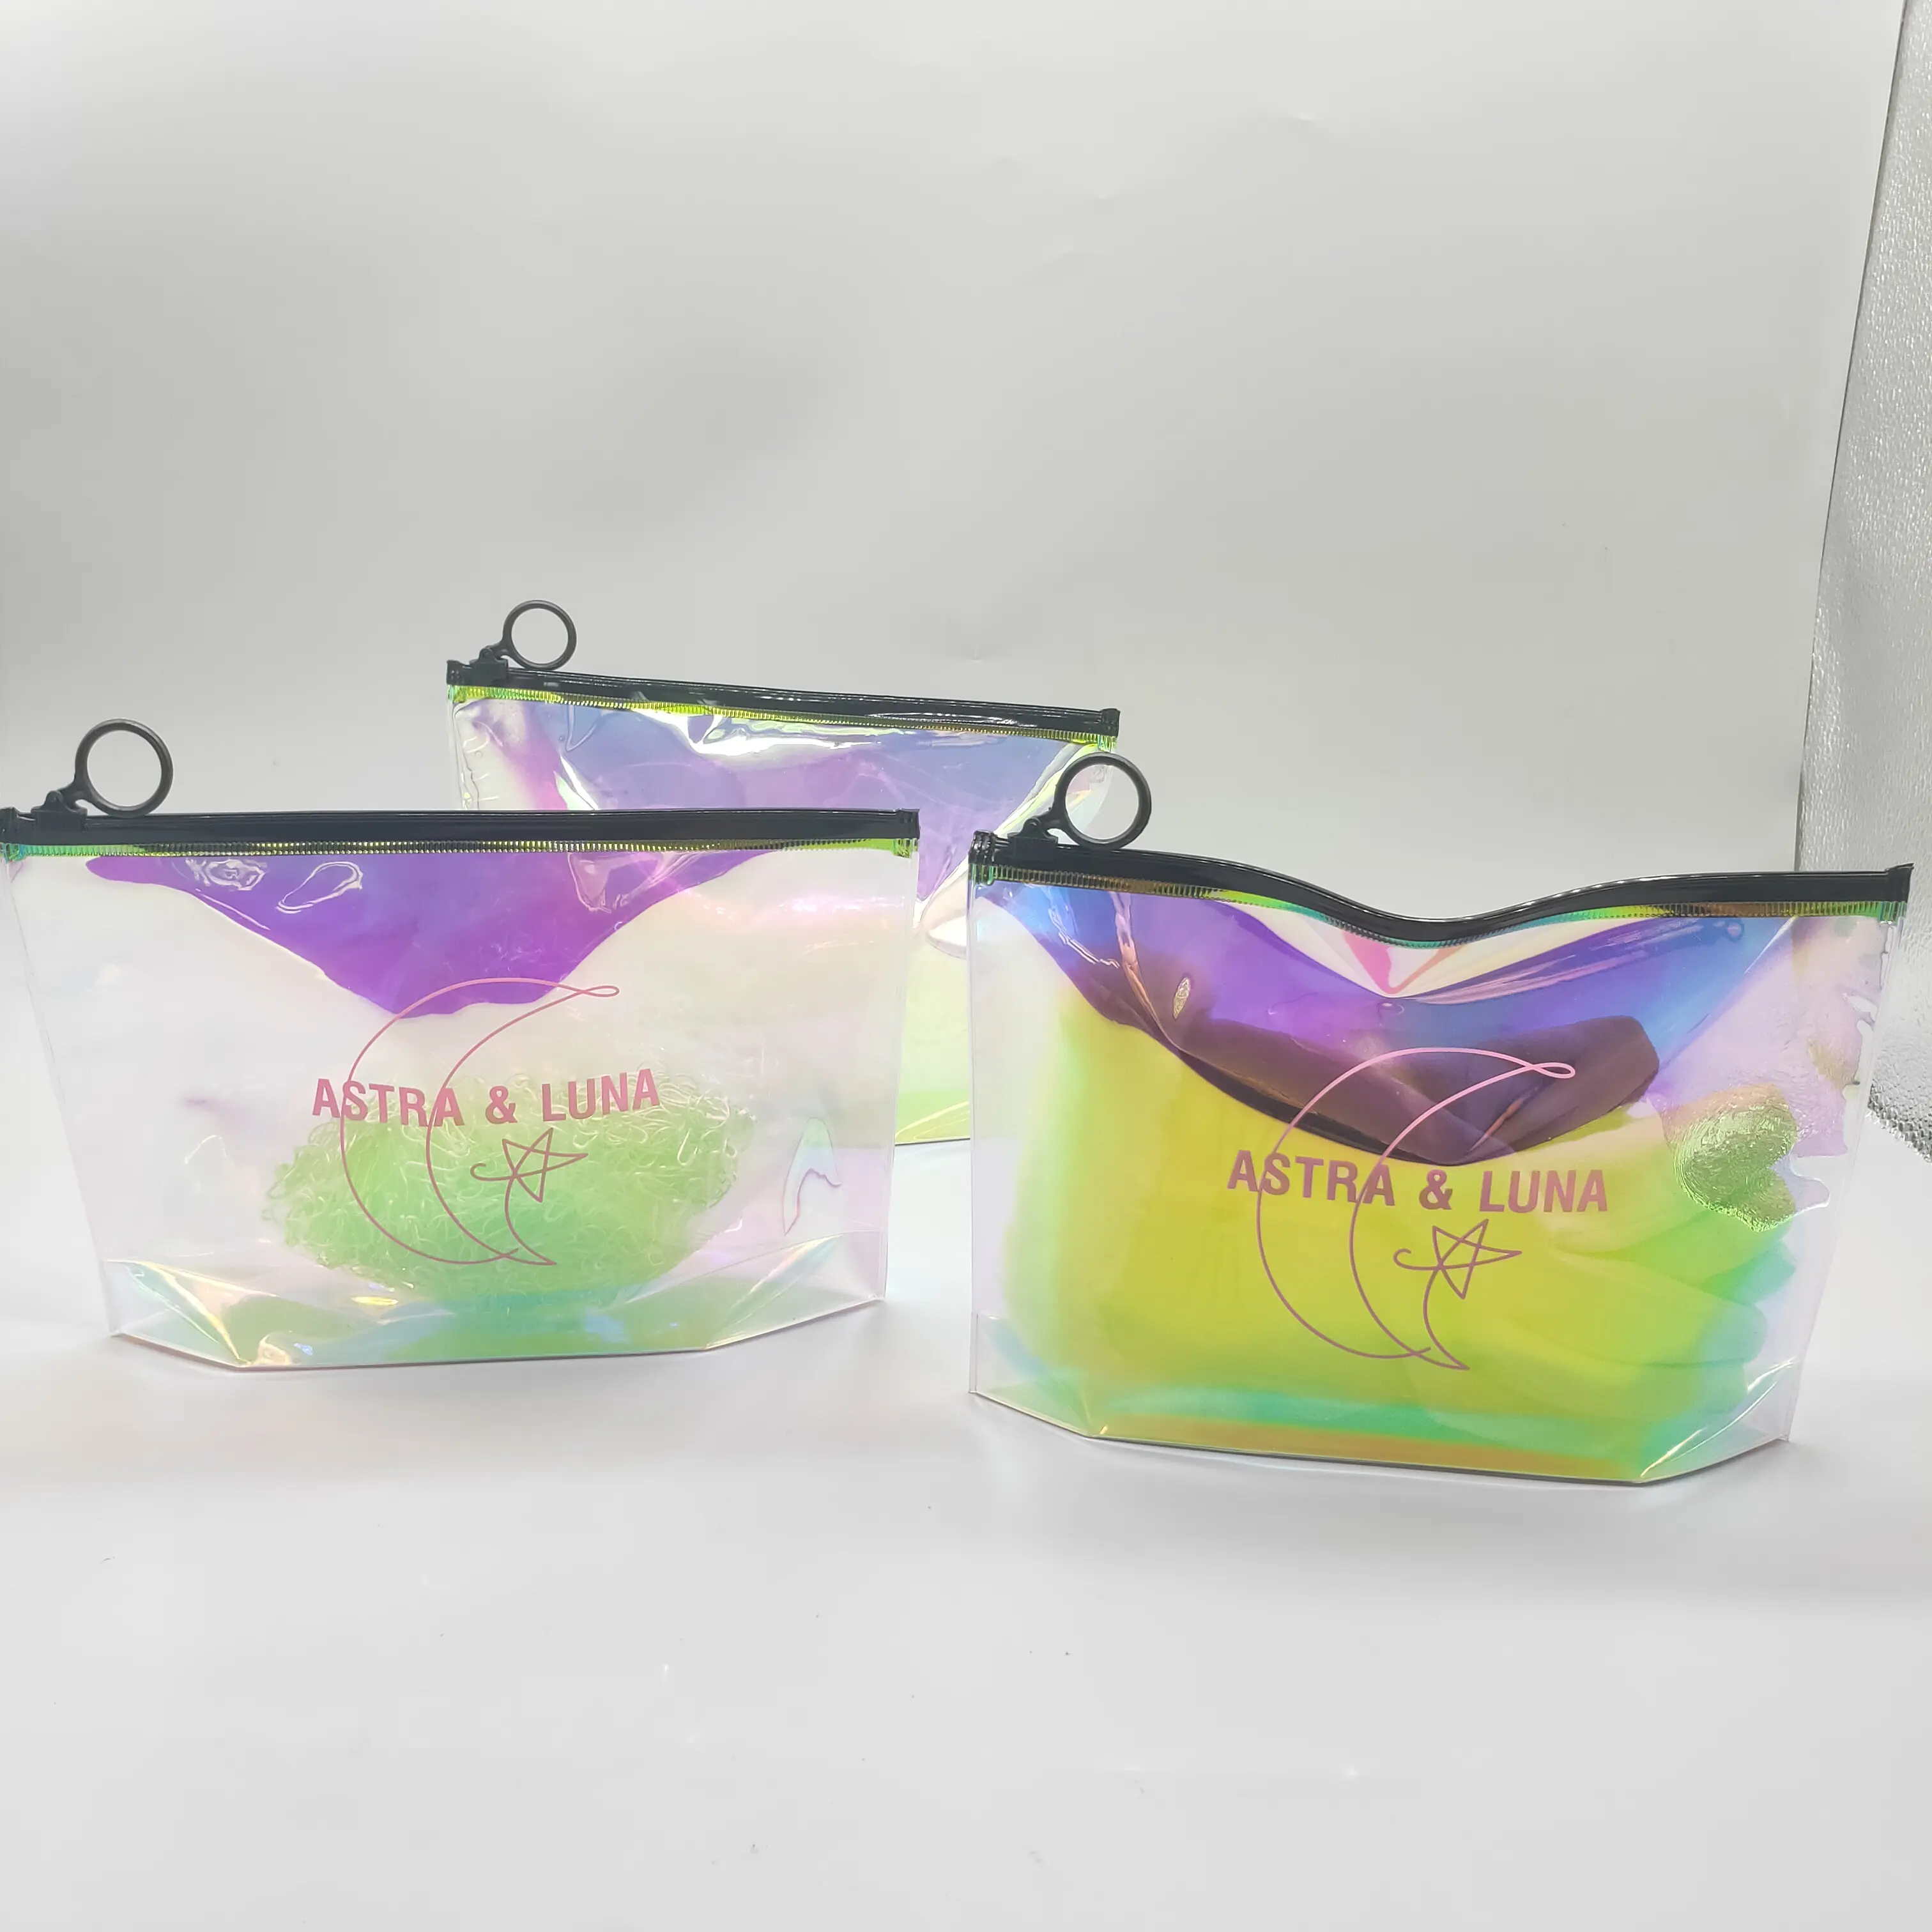 Al por mayor de PVC holográfico de maquillaje de viaje bolsa transparente bolsas de cosméticos